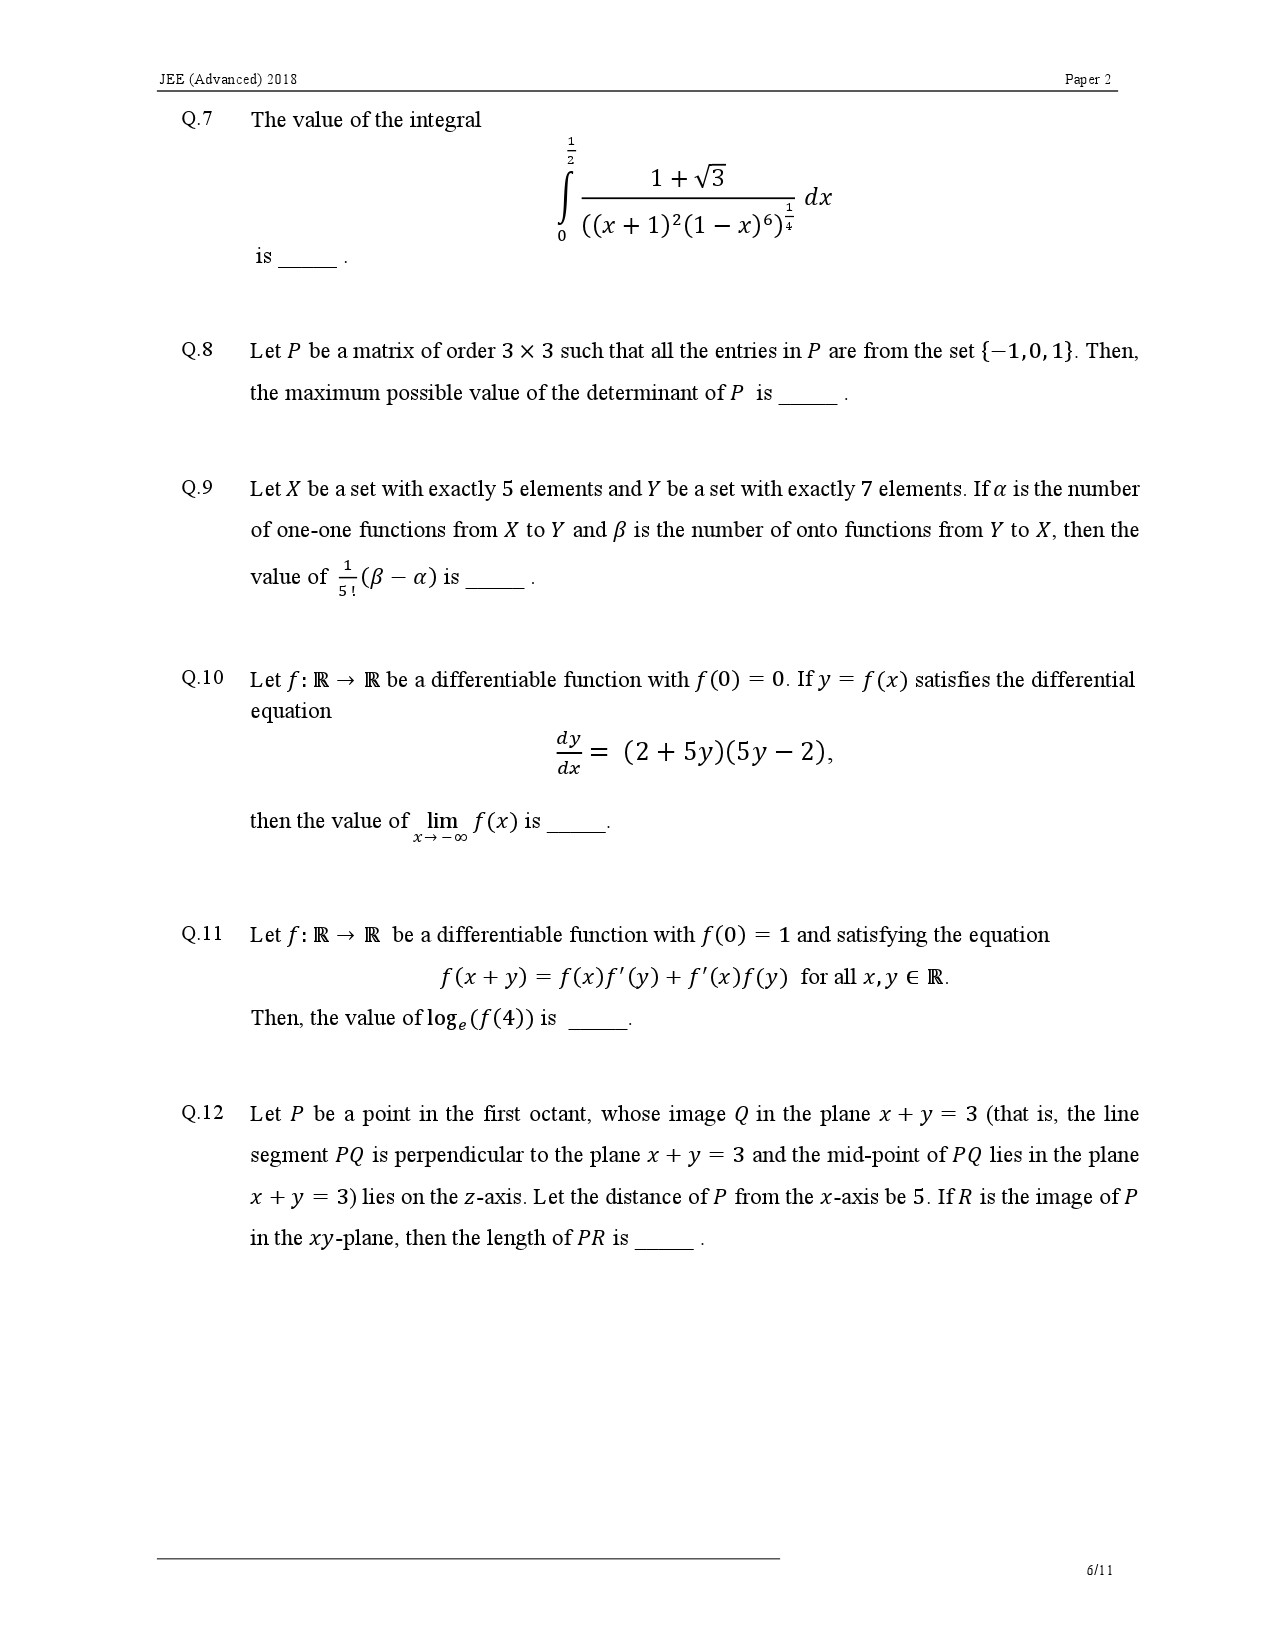 JEE Advanced Exam Question Paper 2018 Paper 2 Mathematics 6